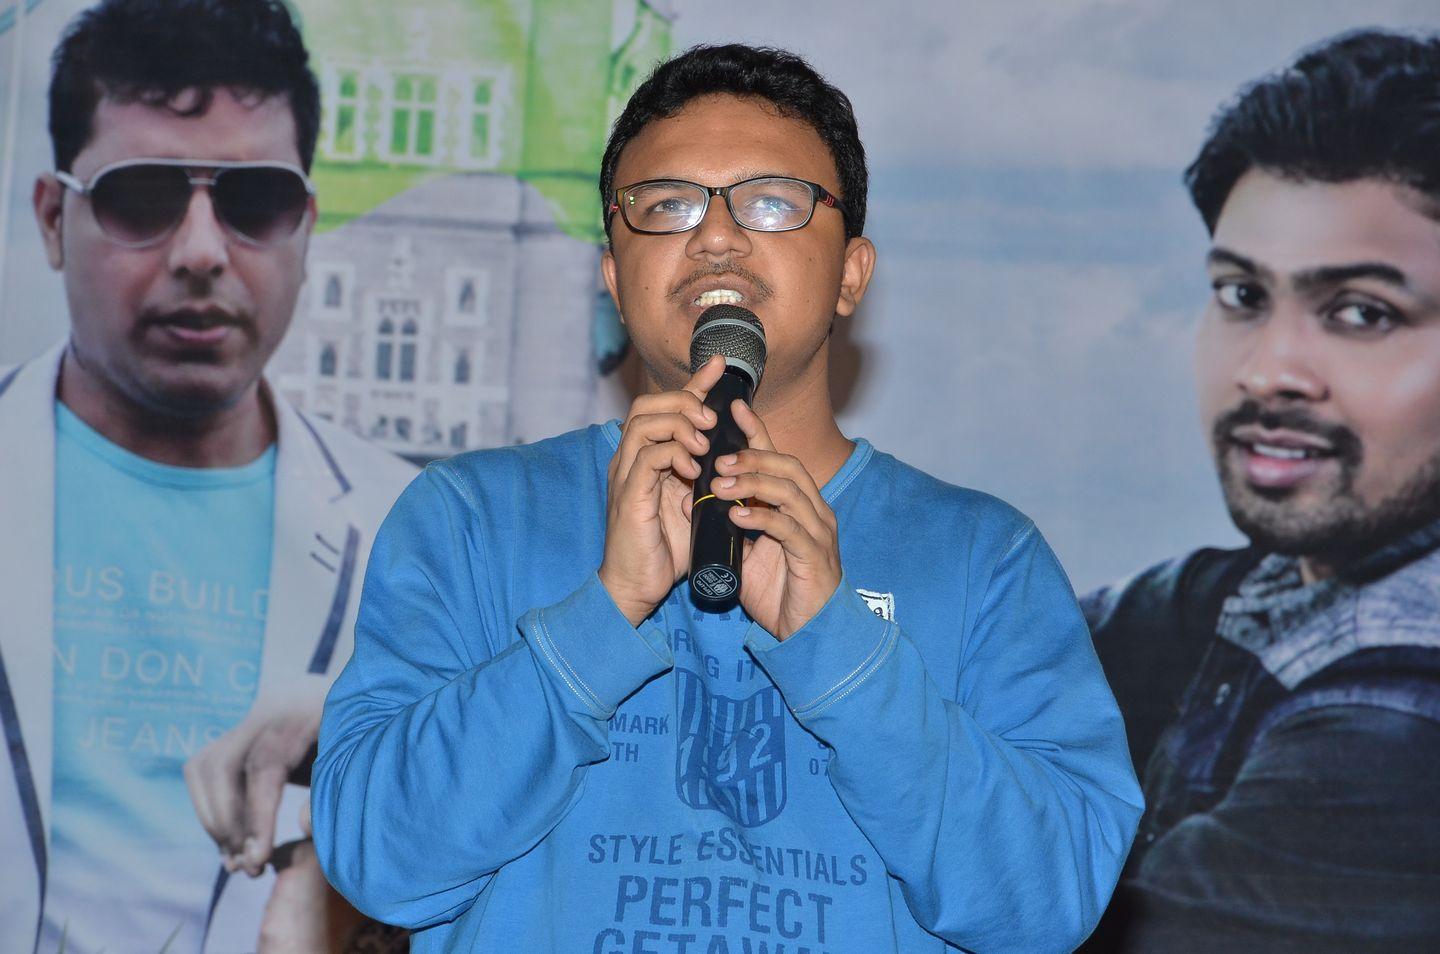 Padamati Sandhya Ragam Movie Audio Launch Photos